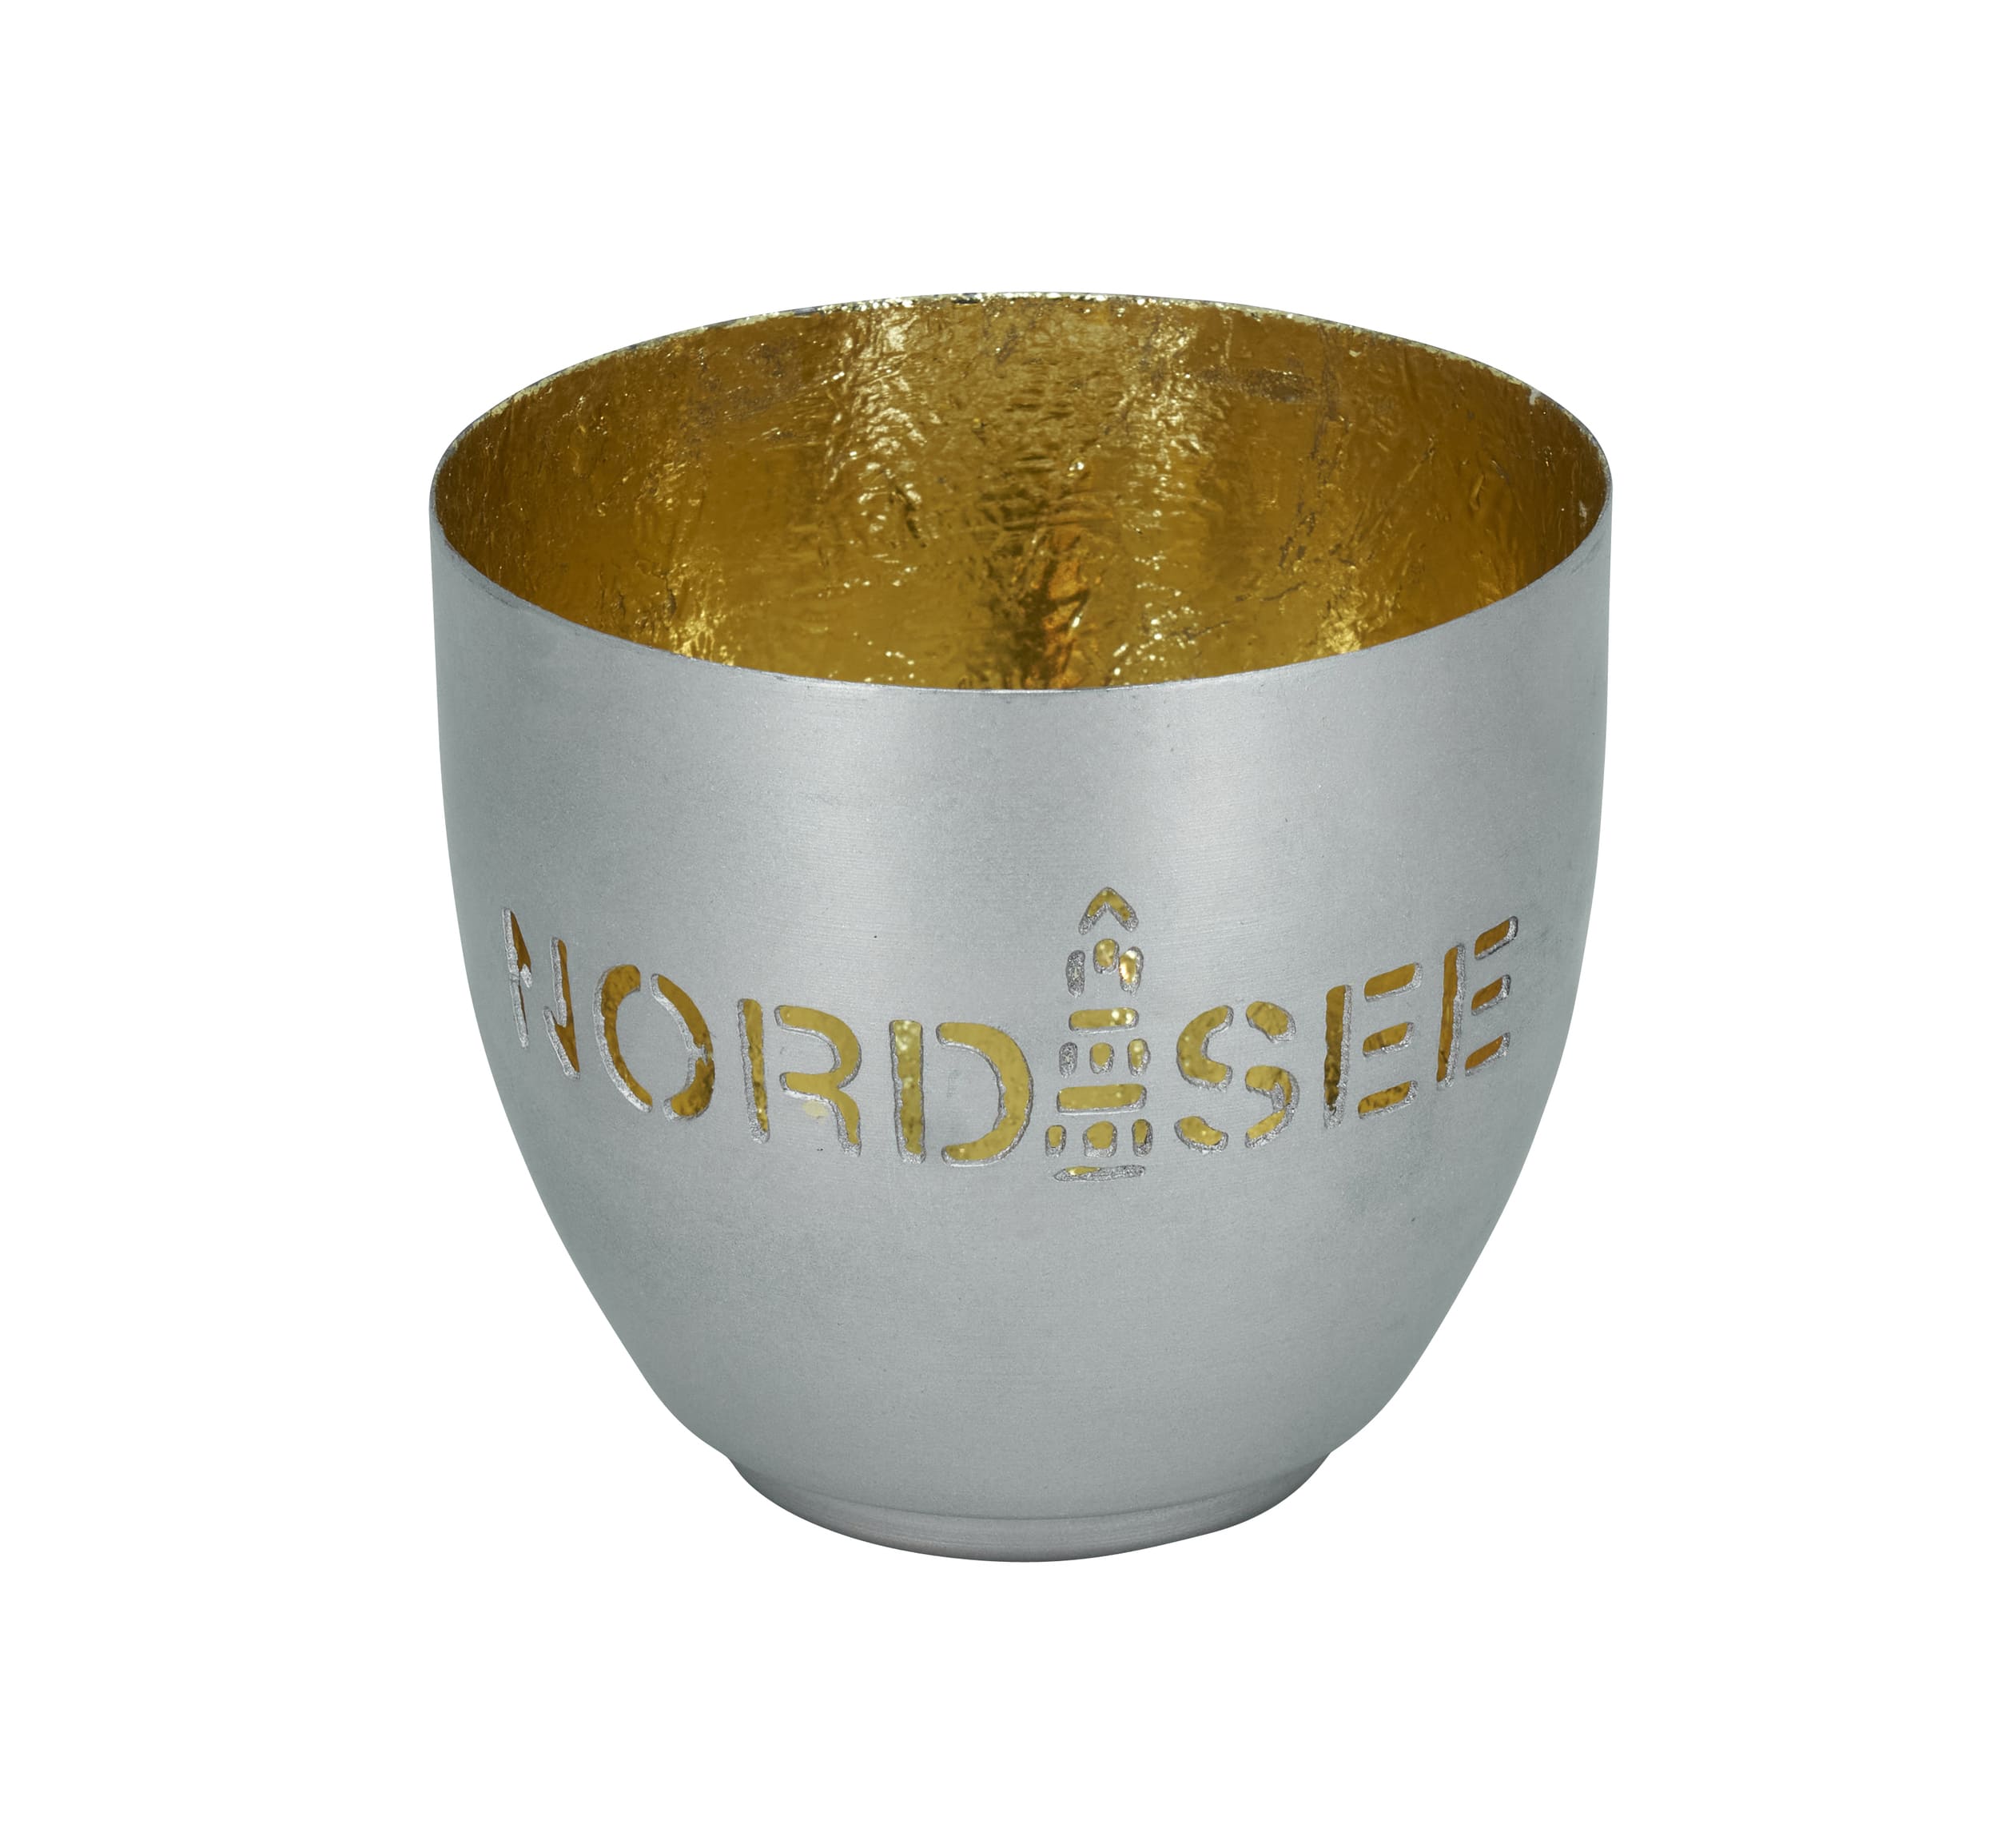 Votiv Bali Nordsee painted champagne gold metallic D=10cm H=9cm